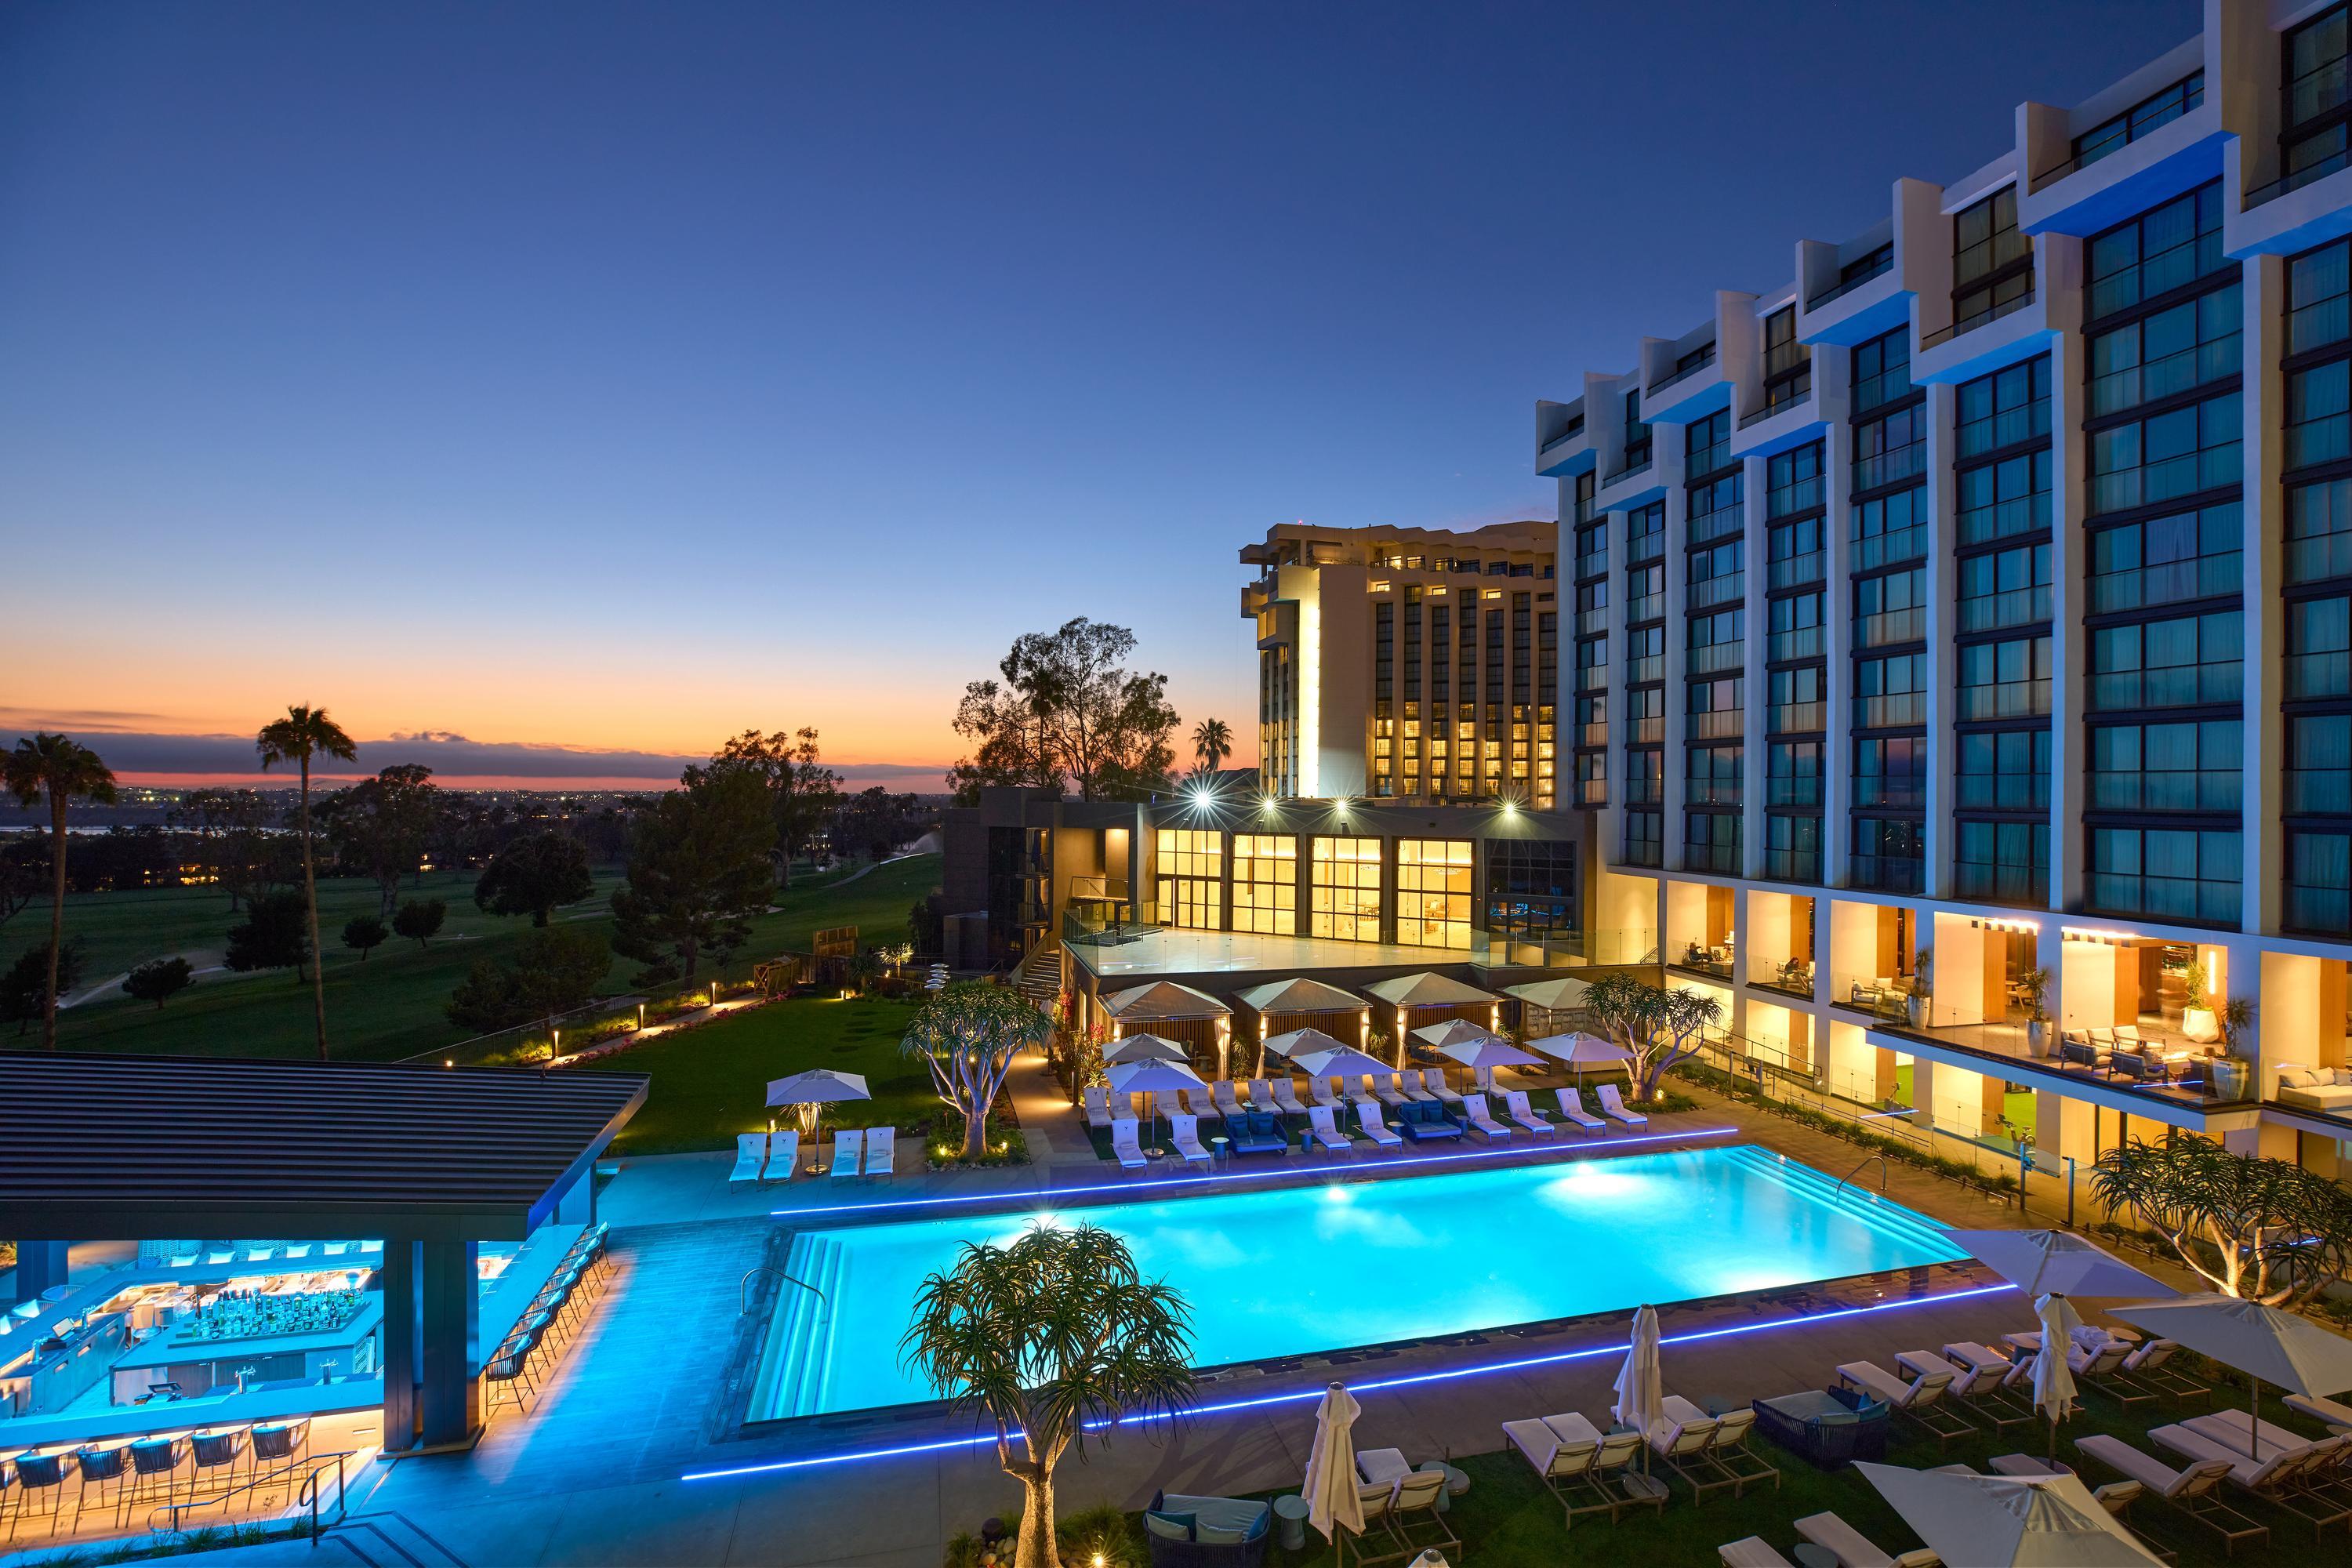 FASHION ISLAND HOTEL NEWPORT BEACH - Newport Beach CA 690 Newport Center  92660